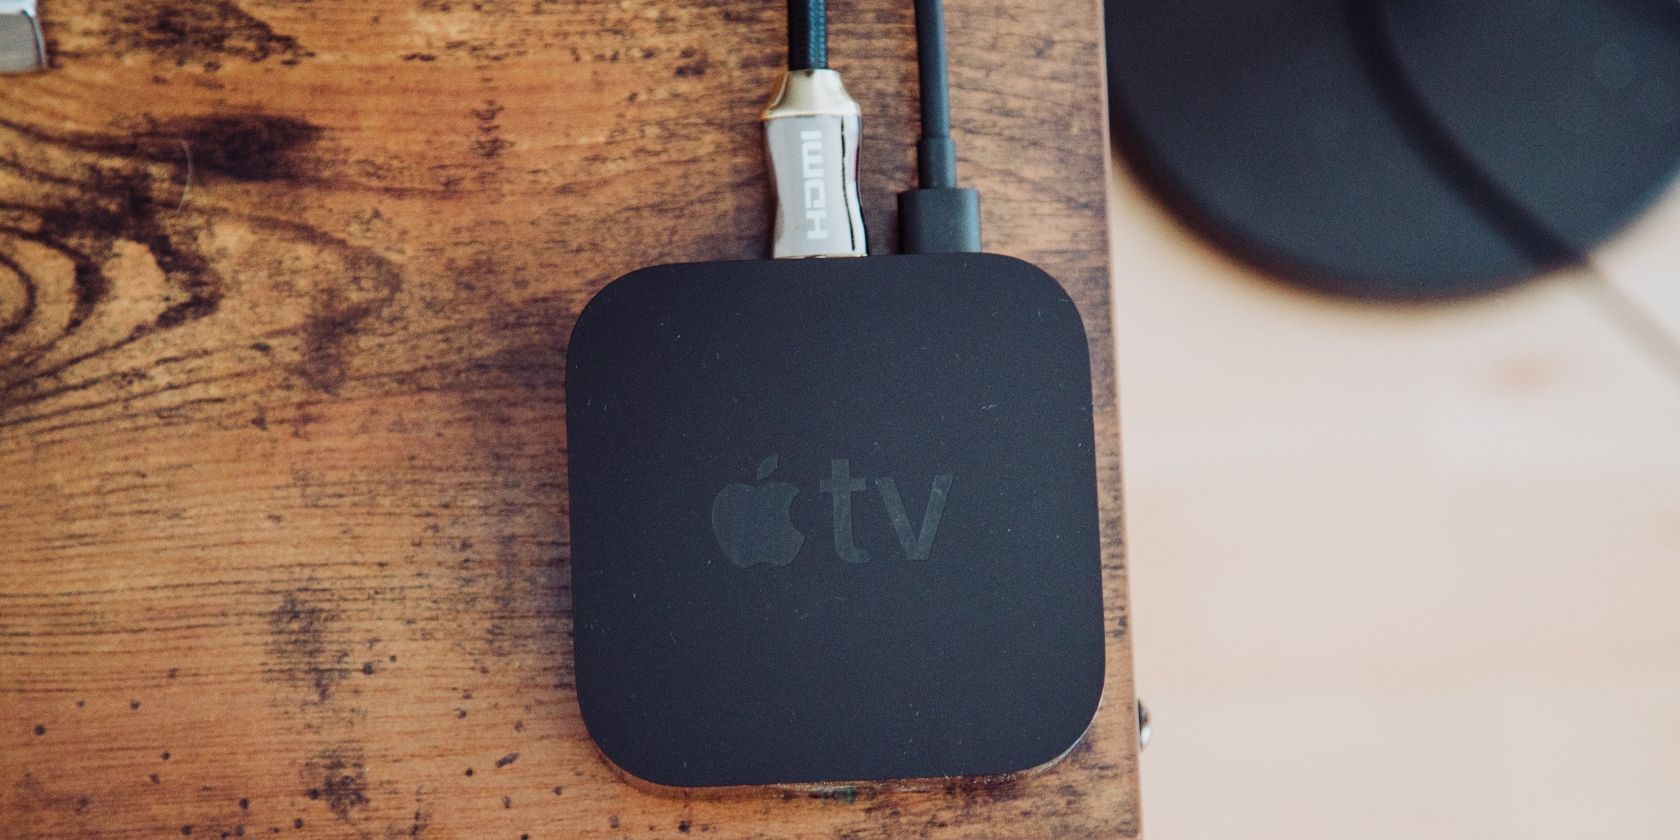 Apple TV adapter